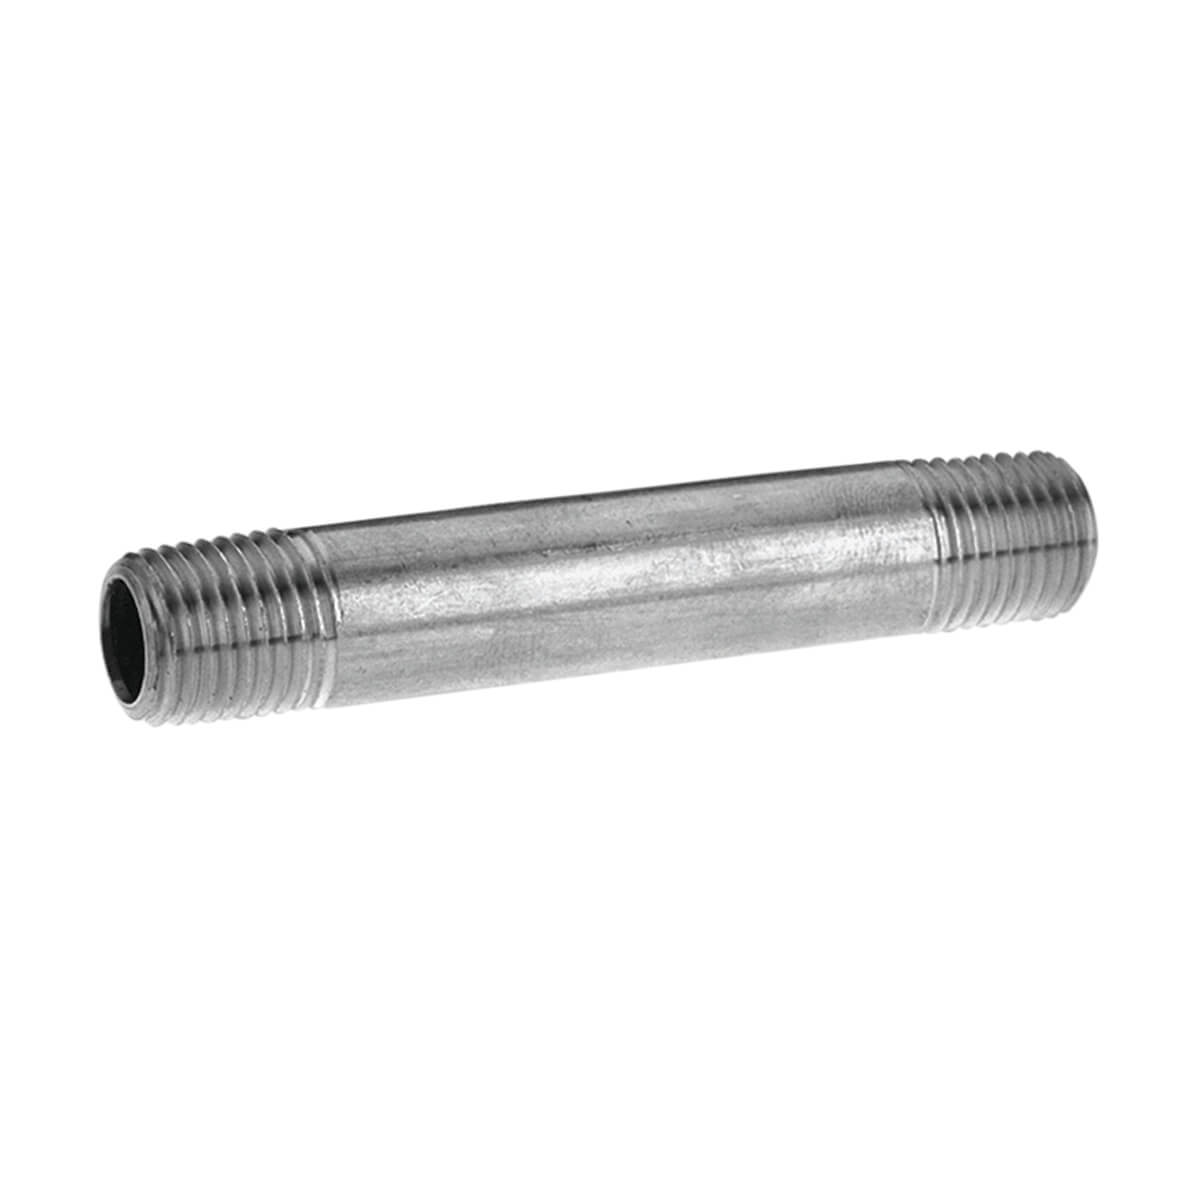 Pipe Nipple Galvanized Steel - 3/4-in x 1-1/2-in